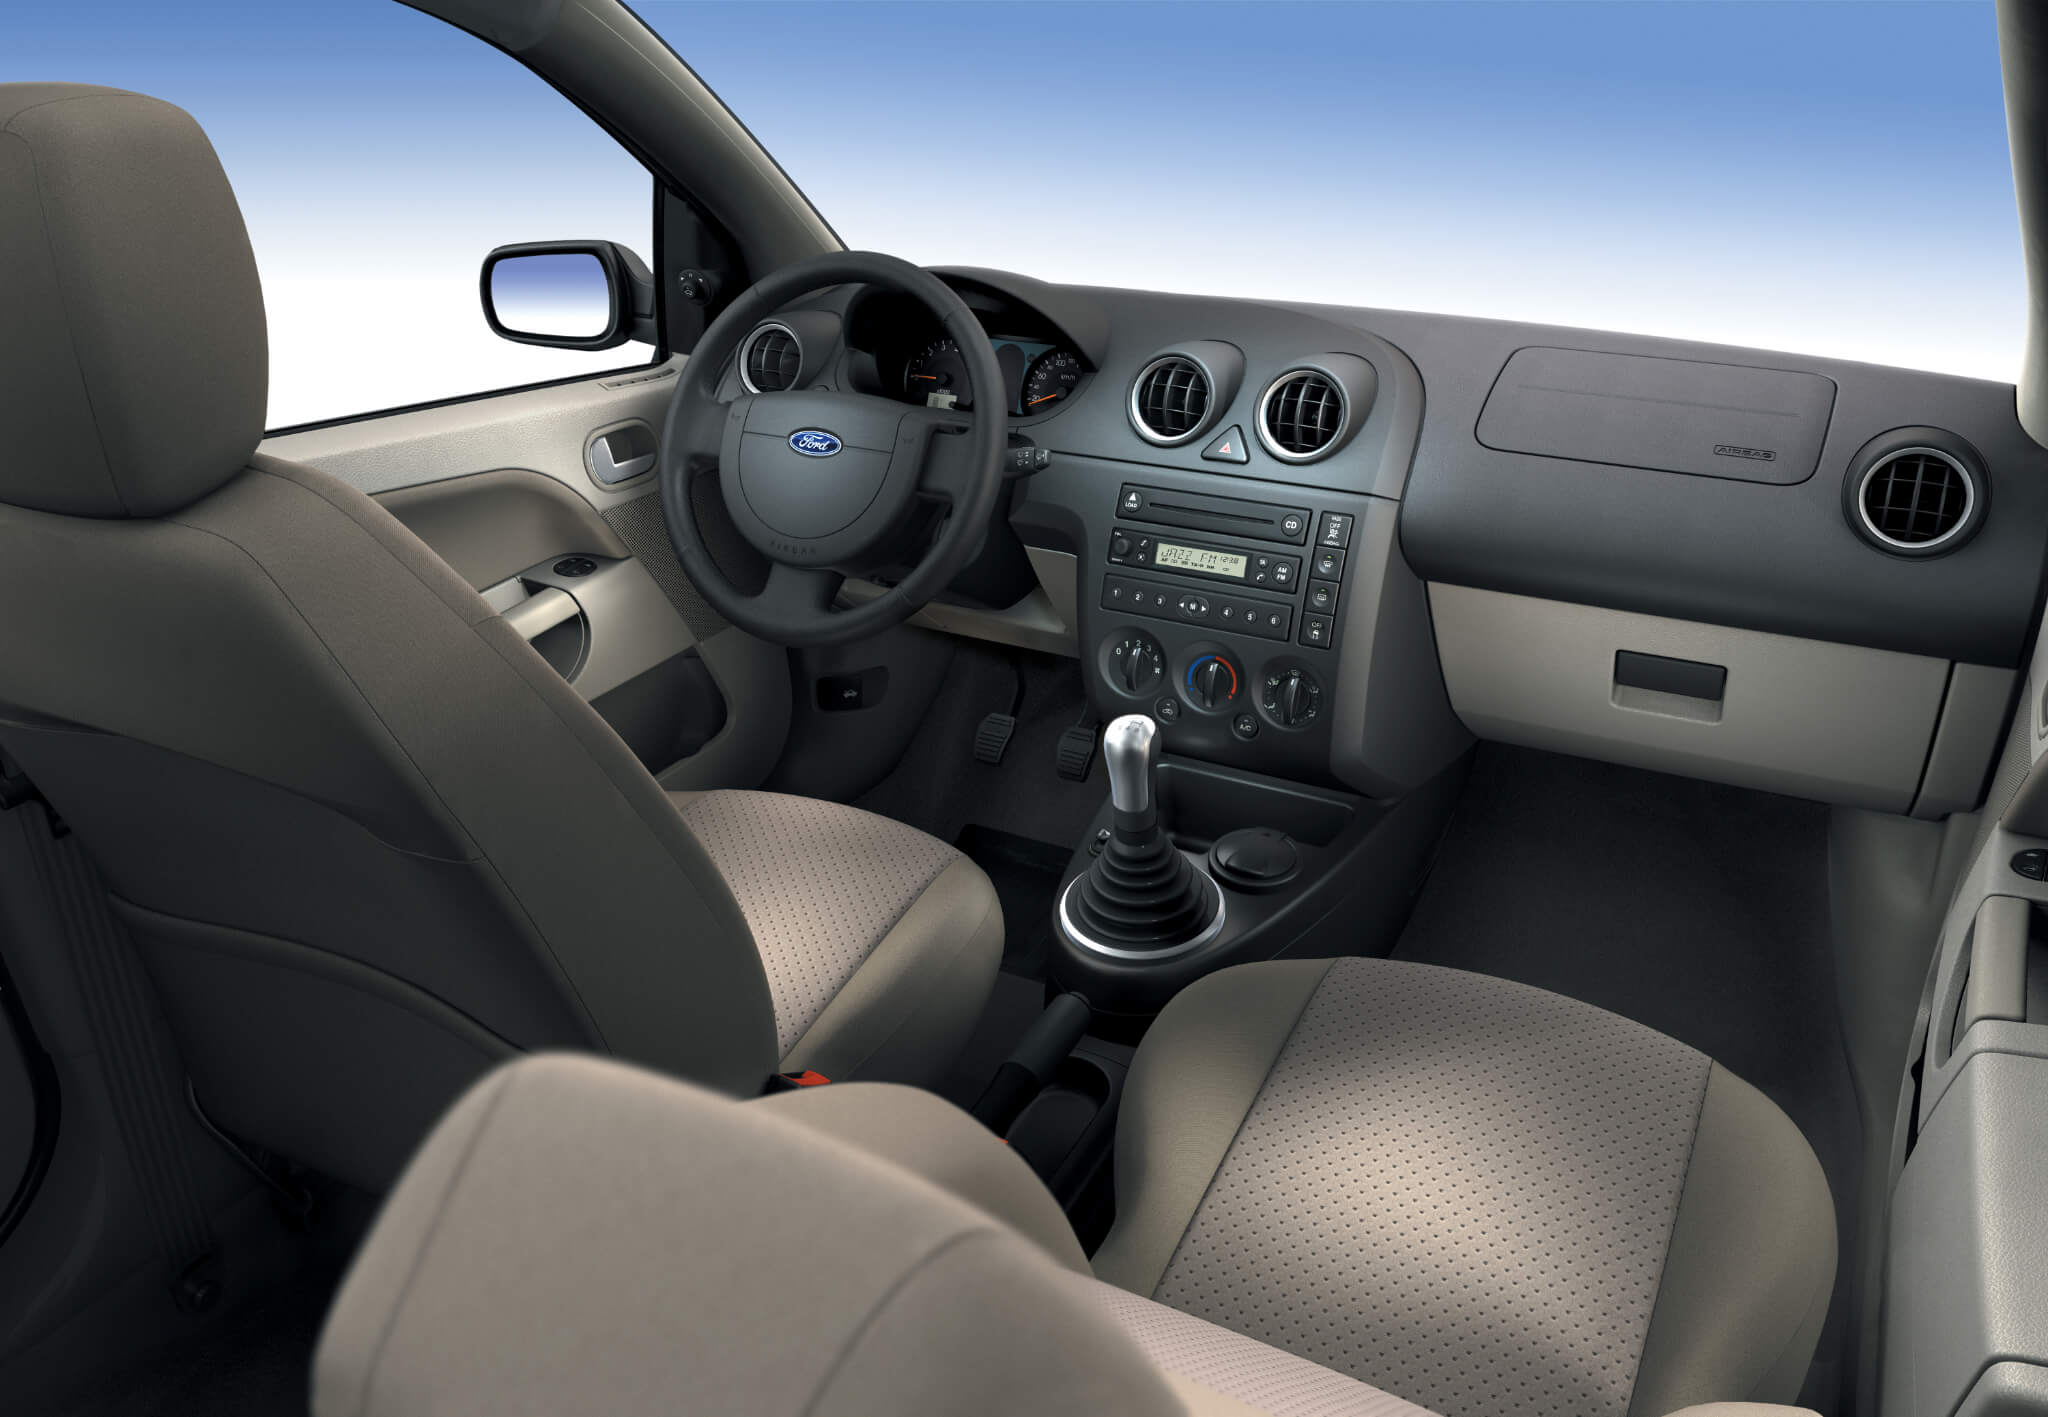 Ford Fiesta Mk6 interior